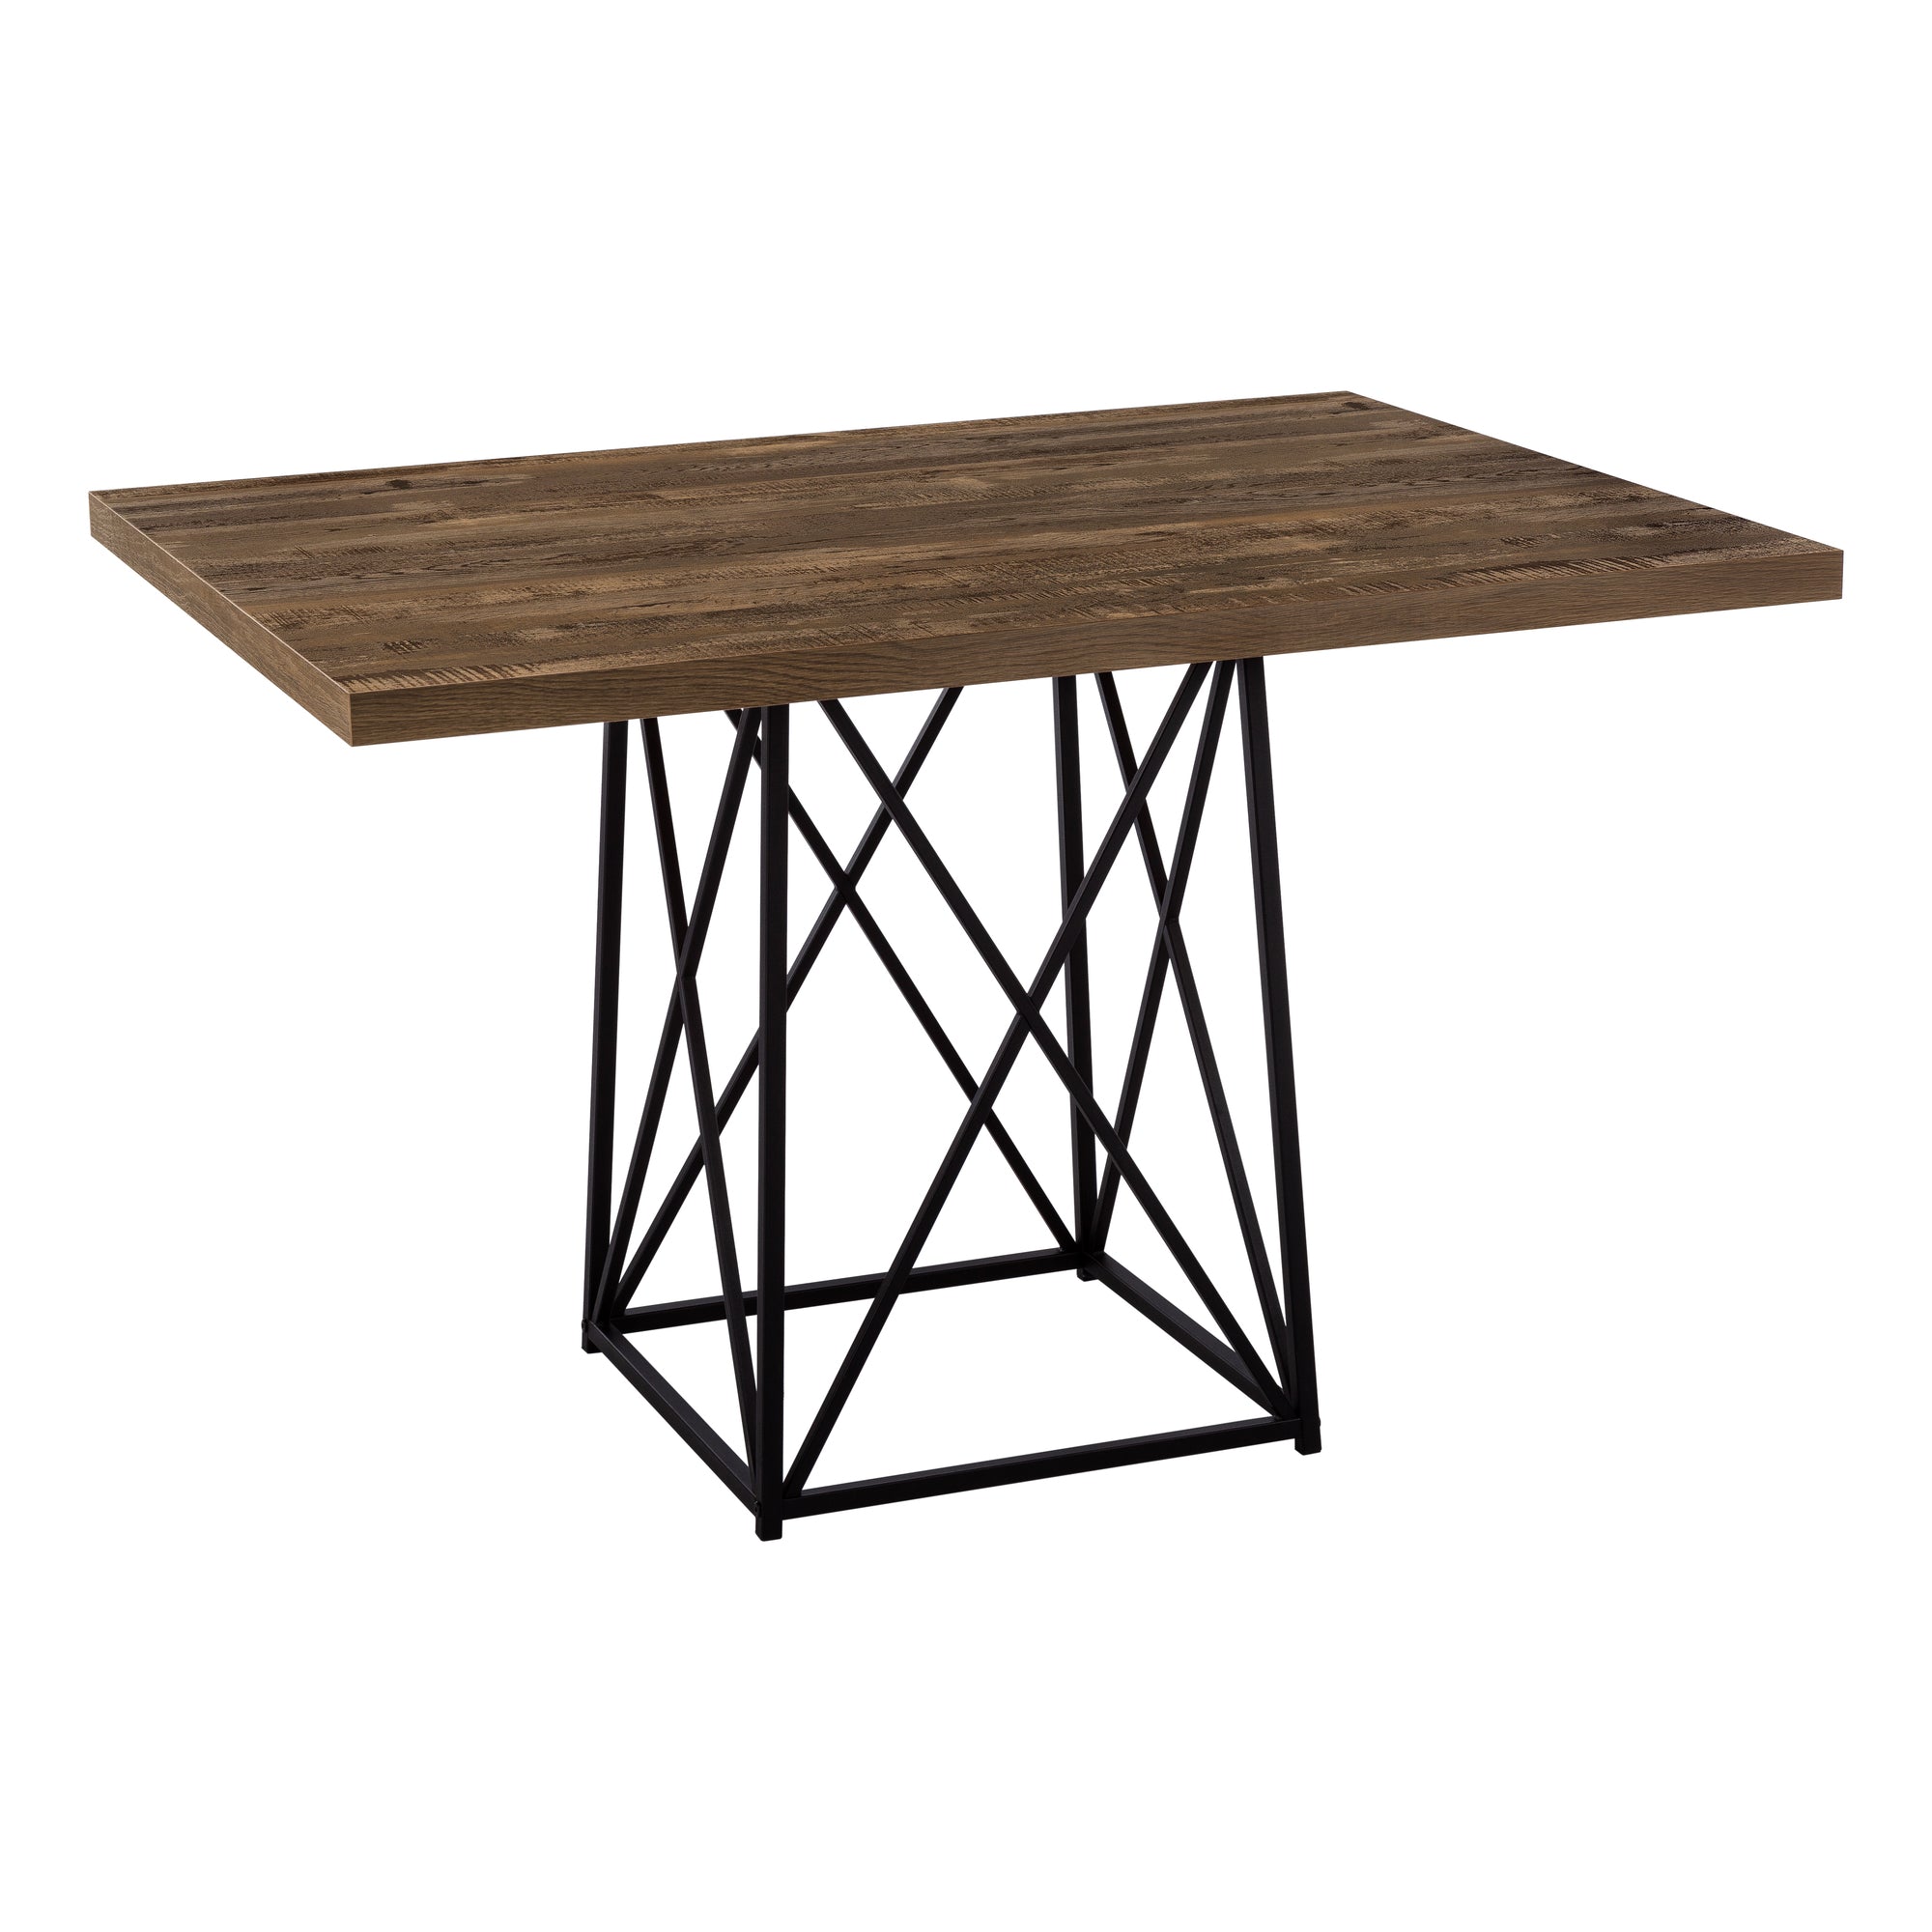 MN-531107    Dining Table, 48" Rectangular, Metal, Kitchen, Dining Room, Metal Base, Laminate, Brown Reclaimed Wood Look, Black, Contemporary, Modern